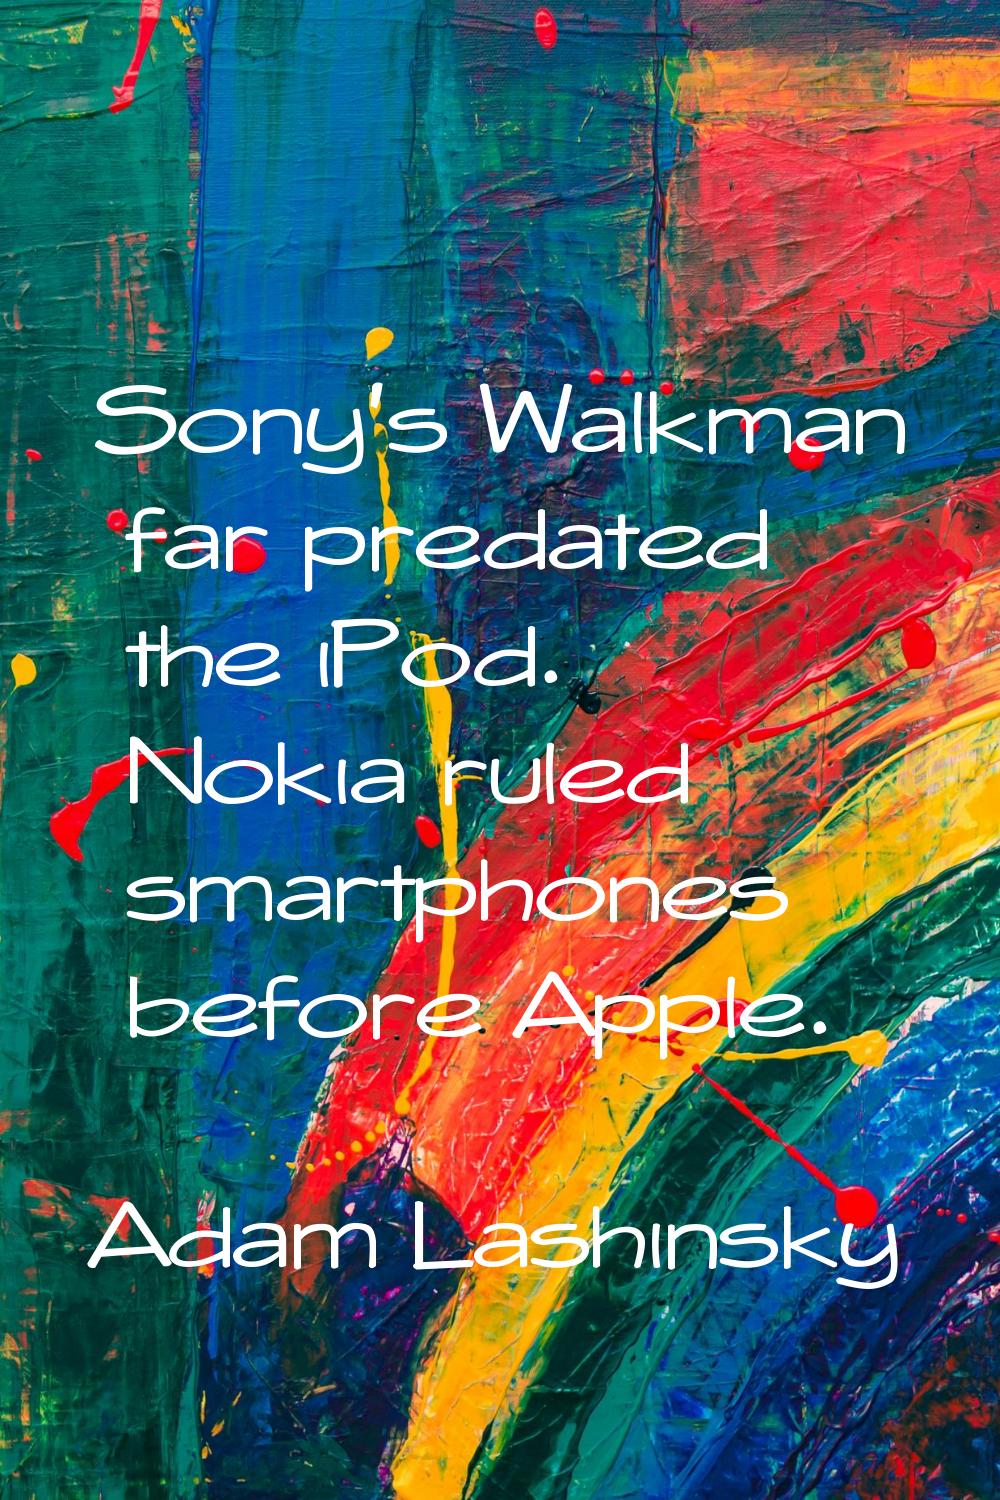 Sony's Walkman far predated the iPod. Nokia ruled smartphones before Apple.